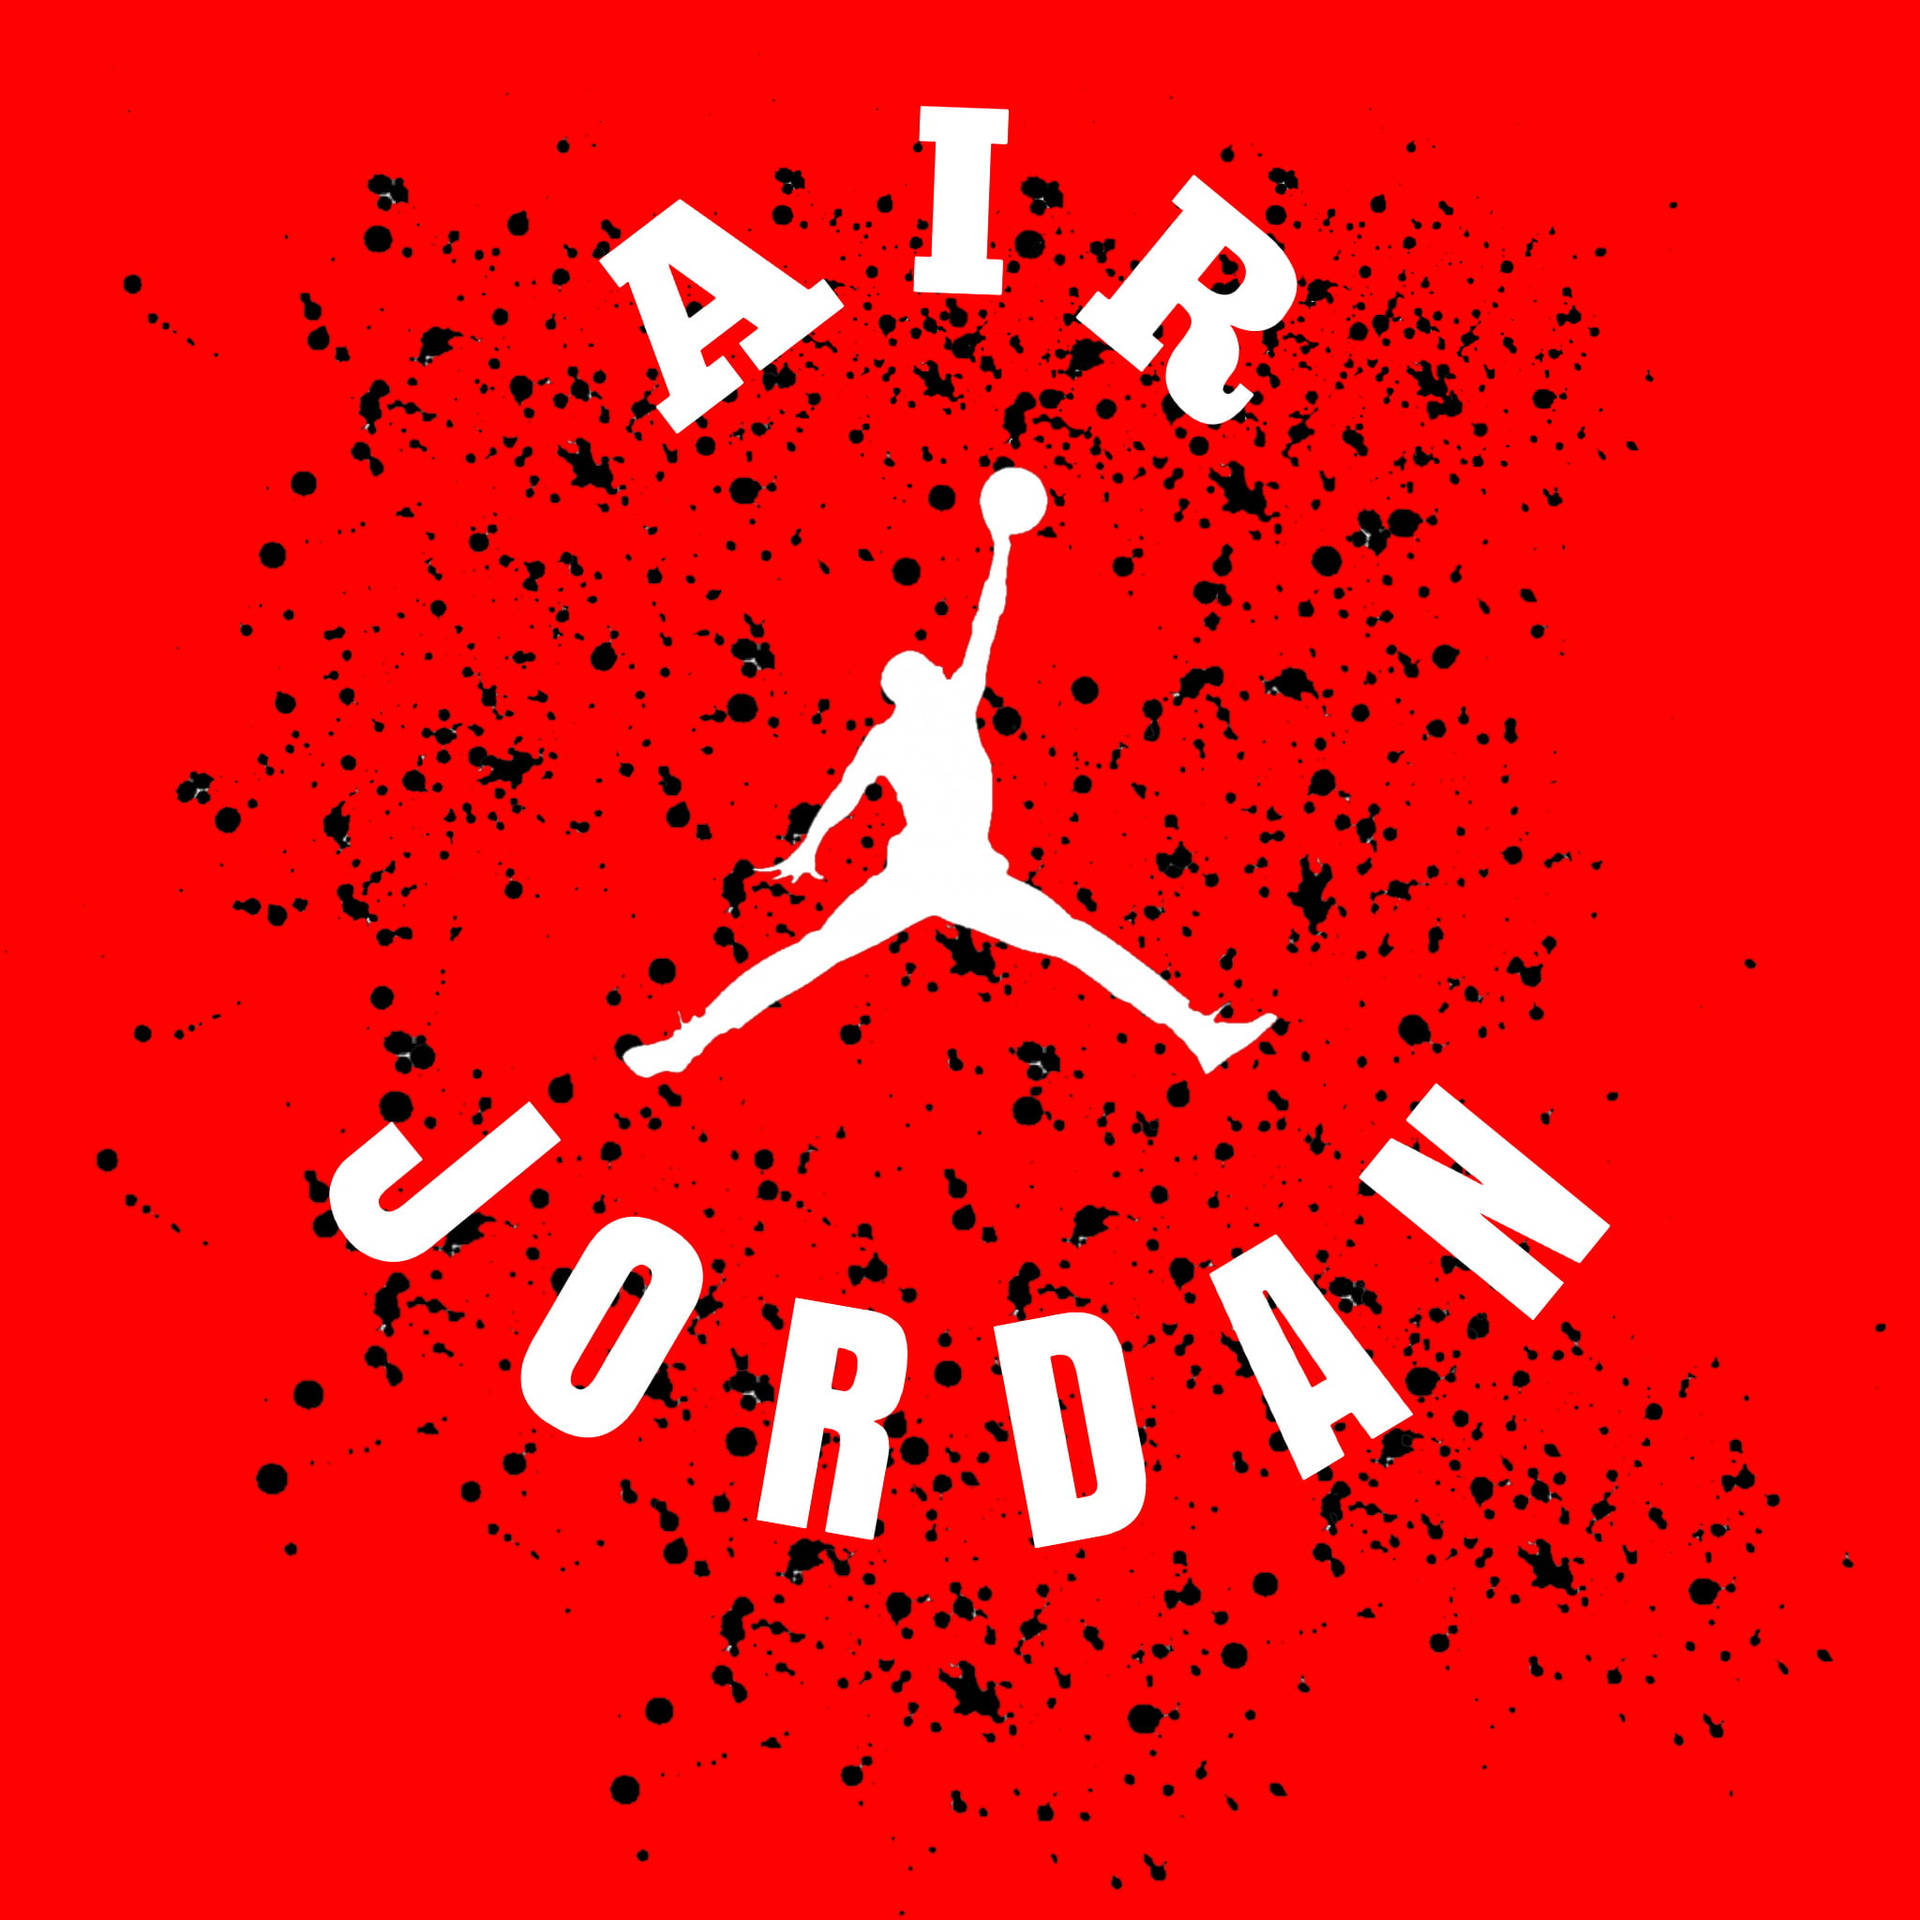 Air Jordan 2048X2048 Wallpaper and Background Image